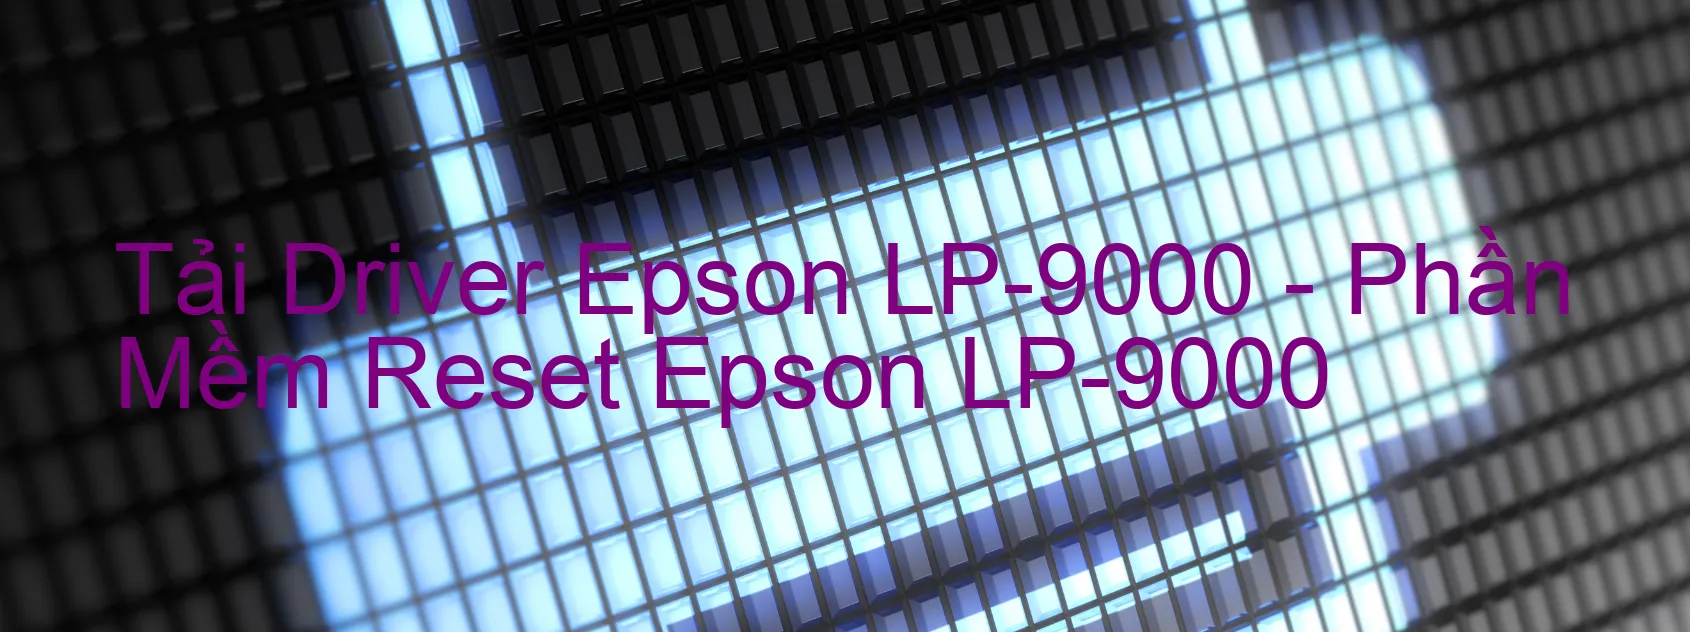 Driver Epson LP-9000, Phần Mềm Reset Epson LP-9000